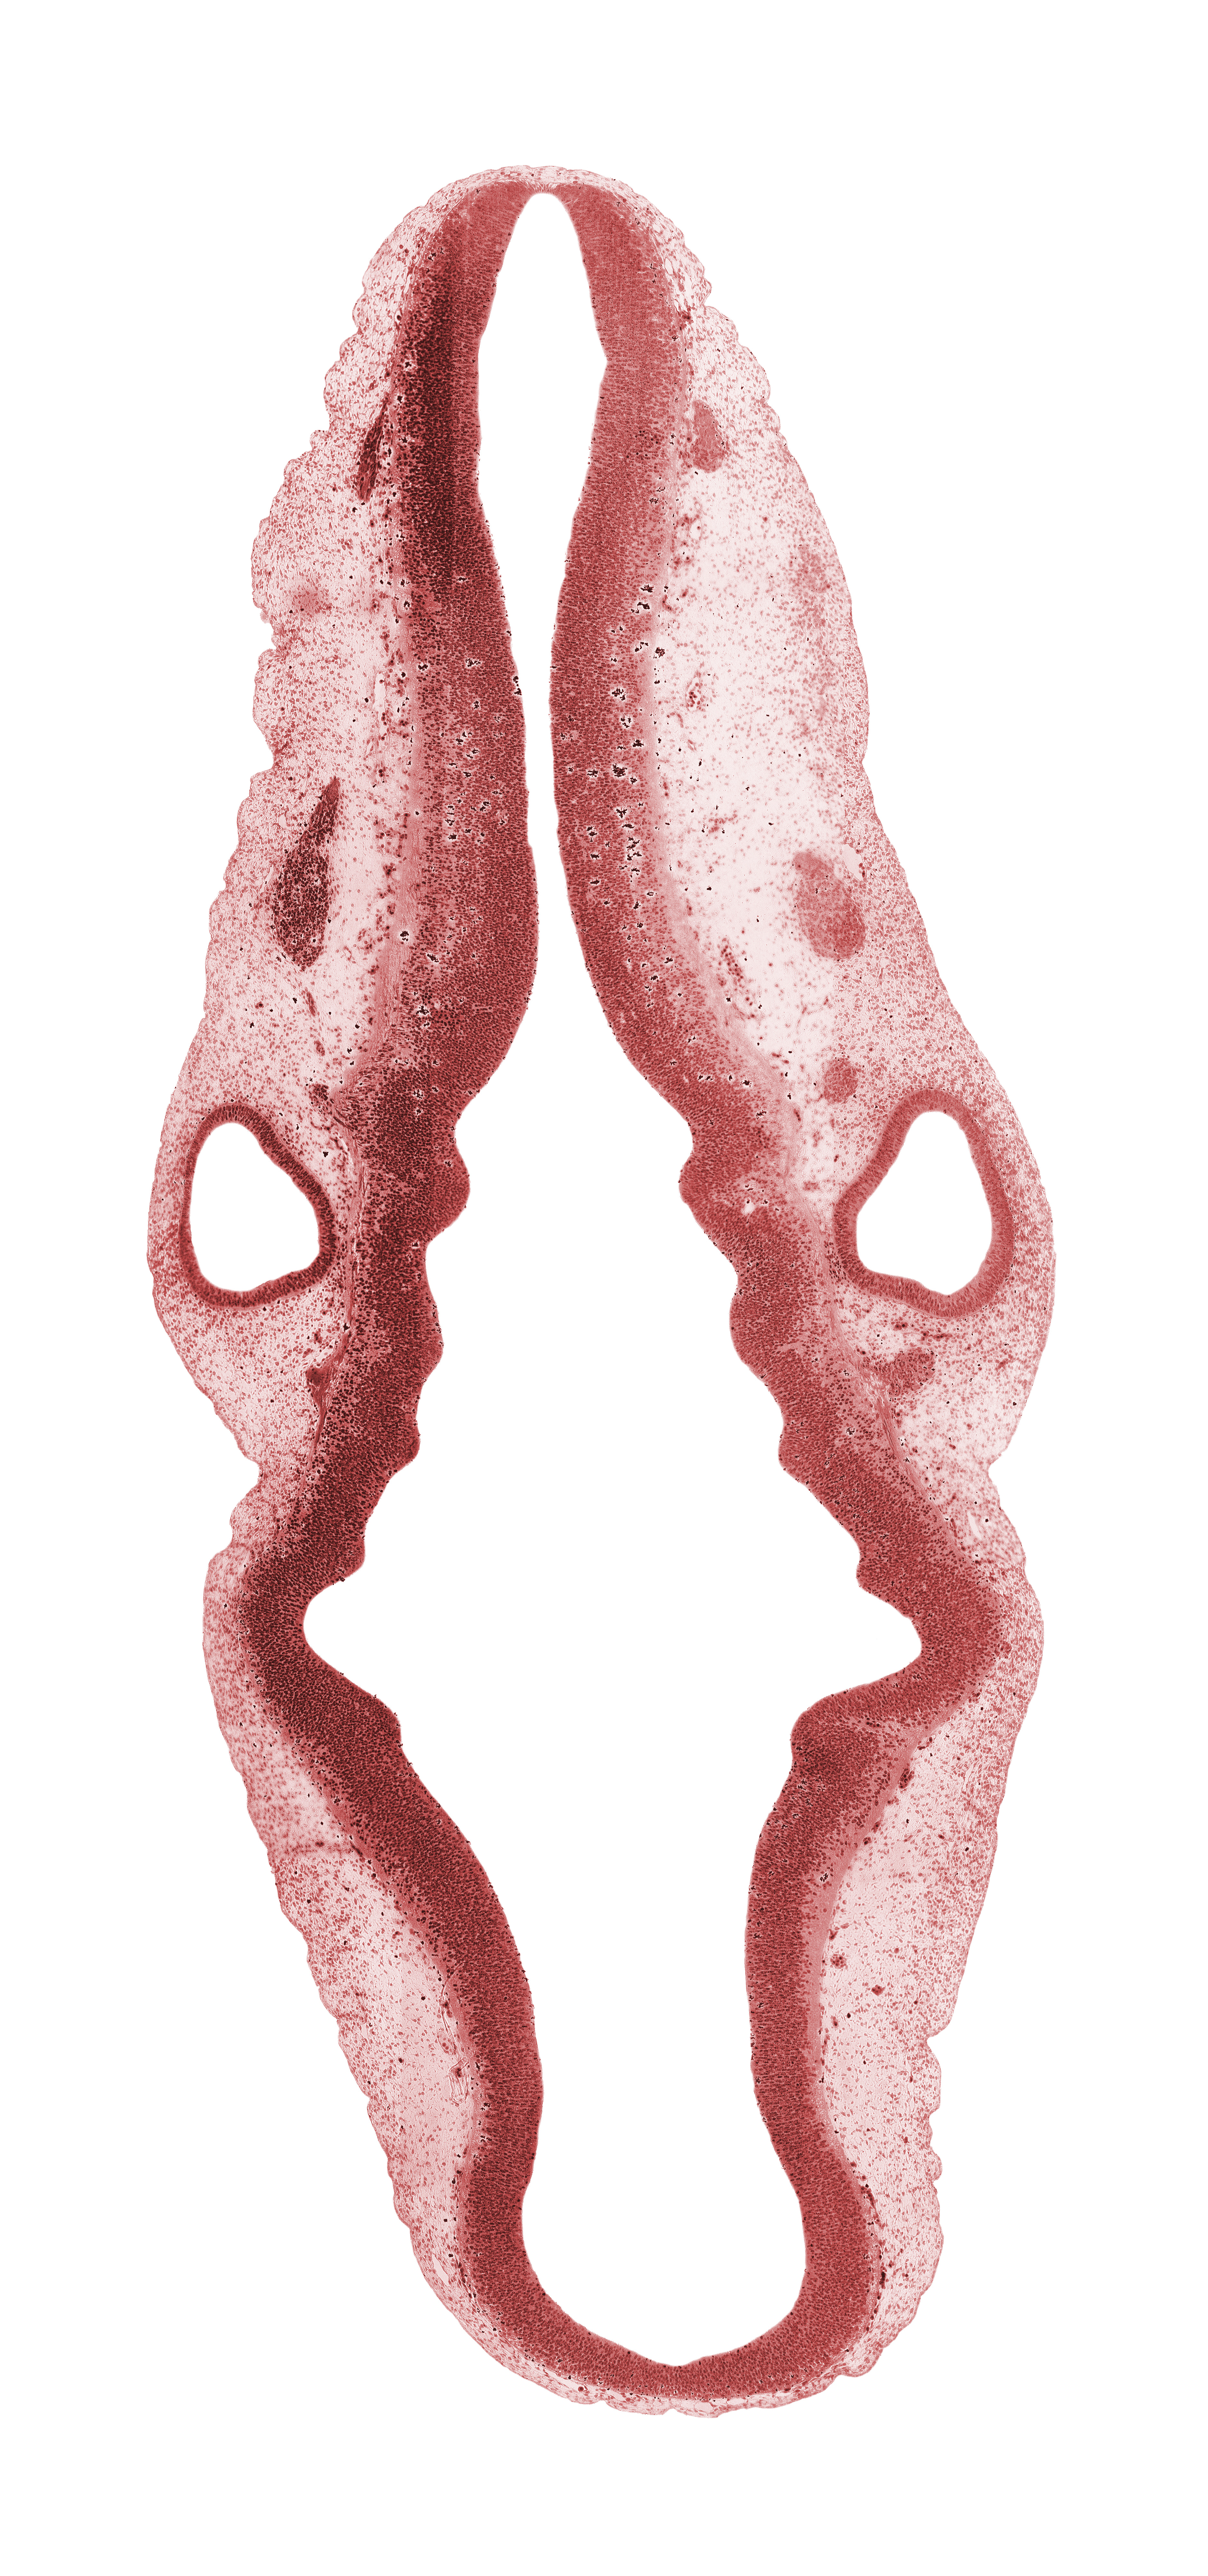 alar plate(s), basal plate, cephalic edge of vestibulocochlear / geniculate ganglia, isthmus of rhombencephalon, mesencephalon (M2), mesencoel (cerebral aqueduct), myelencephalon, posterior dural venous plexus, rhombomere 1, rhombomere 2, rhombomere 3, rhombomere 4, rhombomere 5, spinal accessory nerve (CN XI), sulcus limitans, superior ganglion of glossopharyngeal nerve (CN IX), superior ganglion of vagus nerve (CN X), transverse rhombencephalic sulcus, vestibular part of otic vesicle